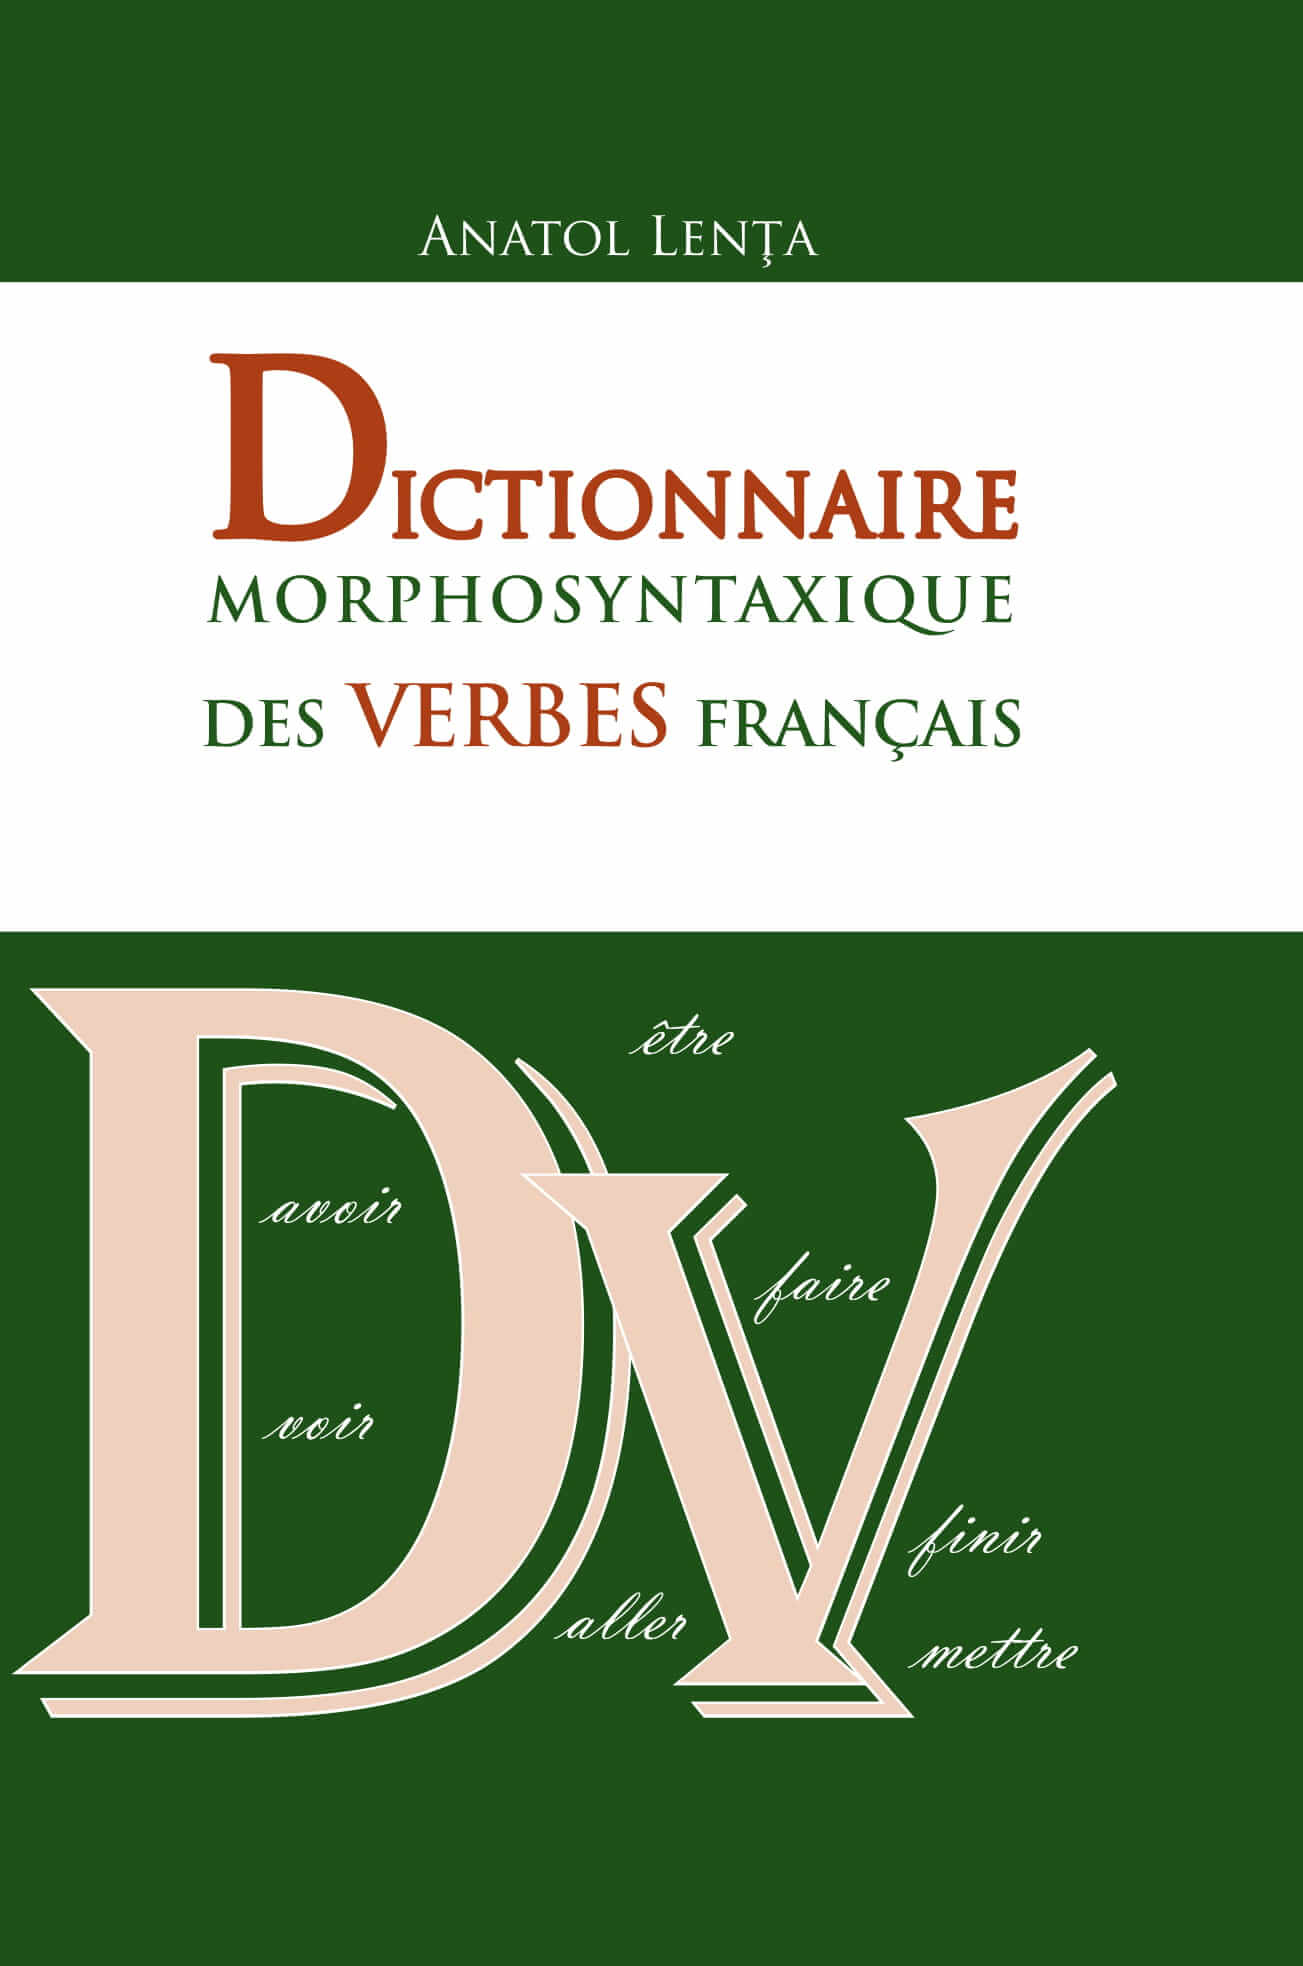 Dictionnaire morphosyntaxique des verbes francais | Anatol Lenta carturesti 2022